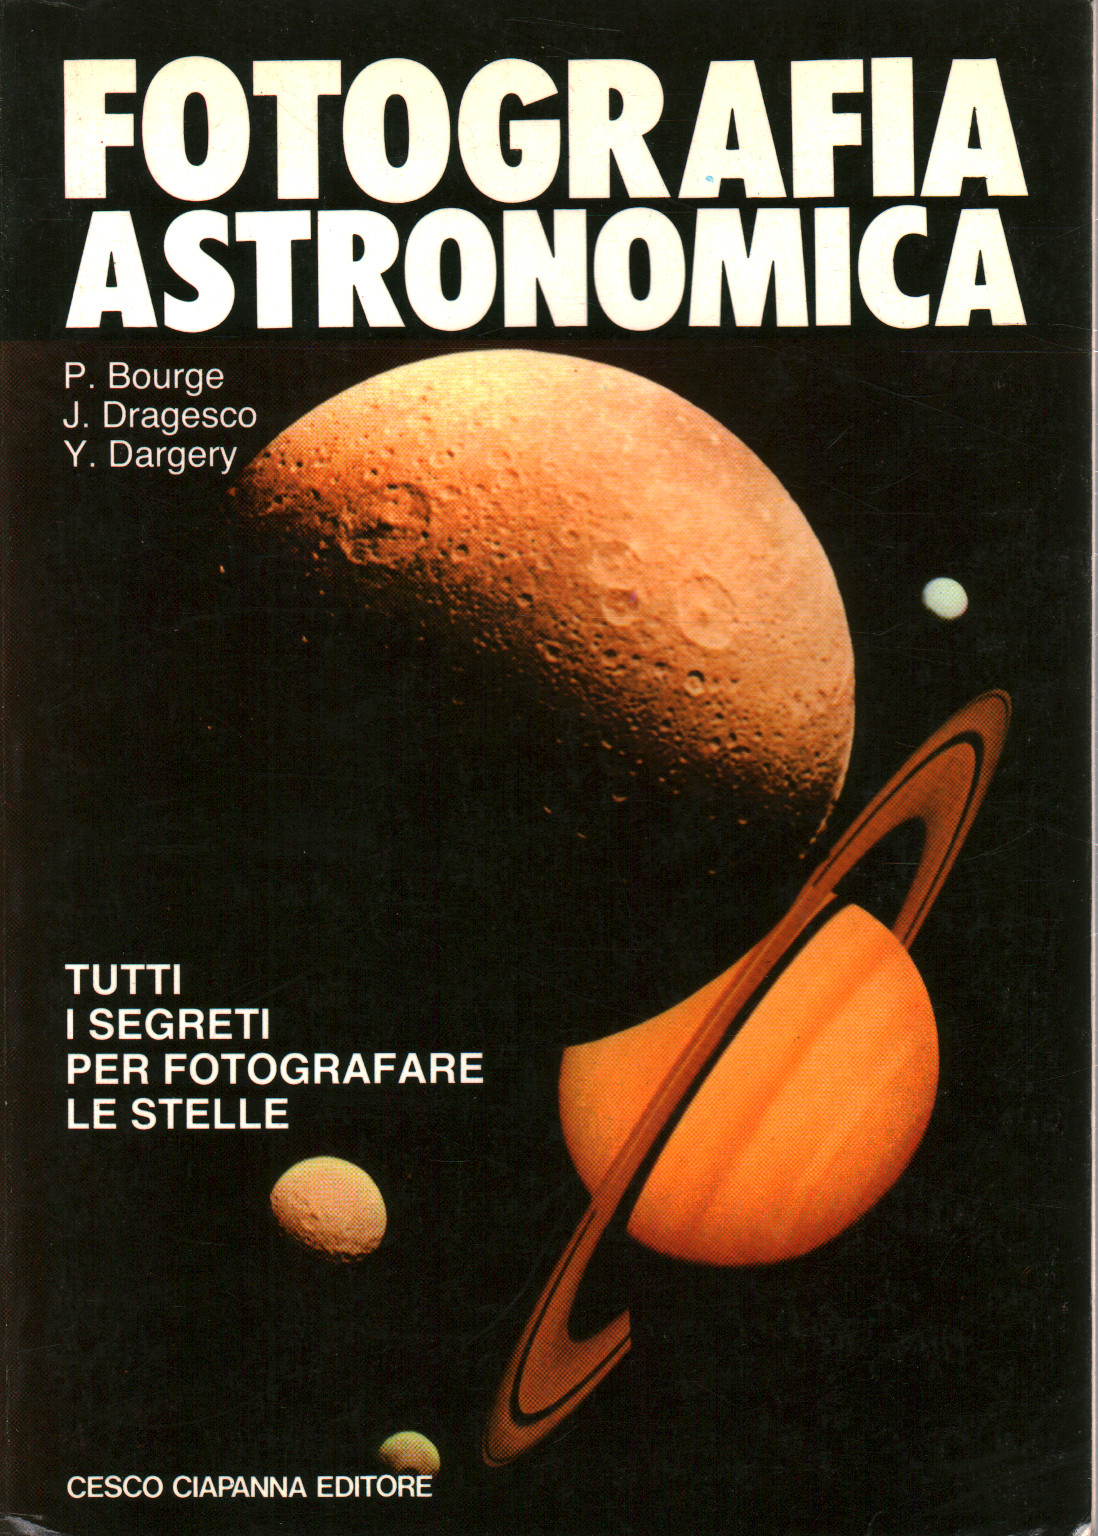 Fotografia astronomica, s.a.